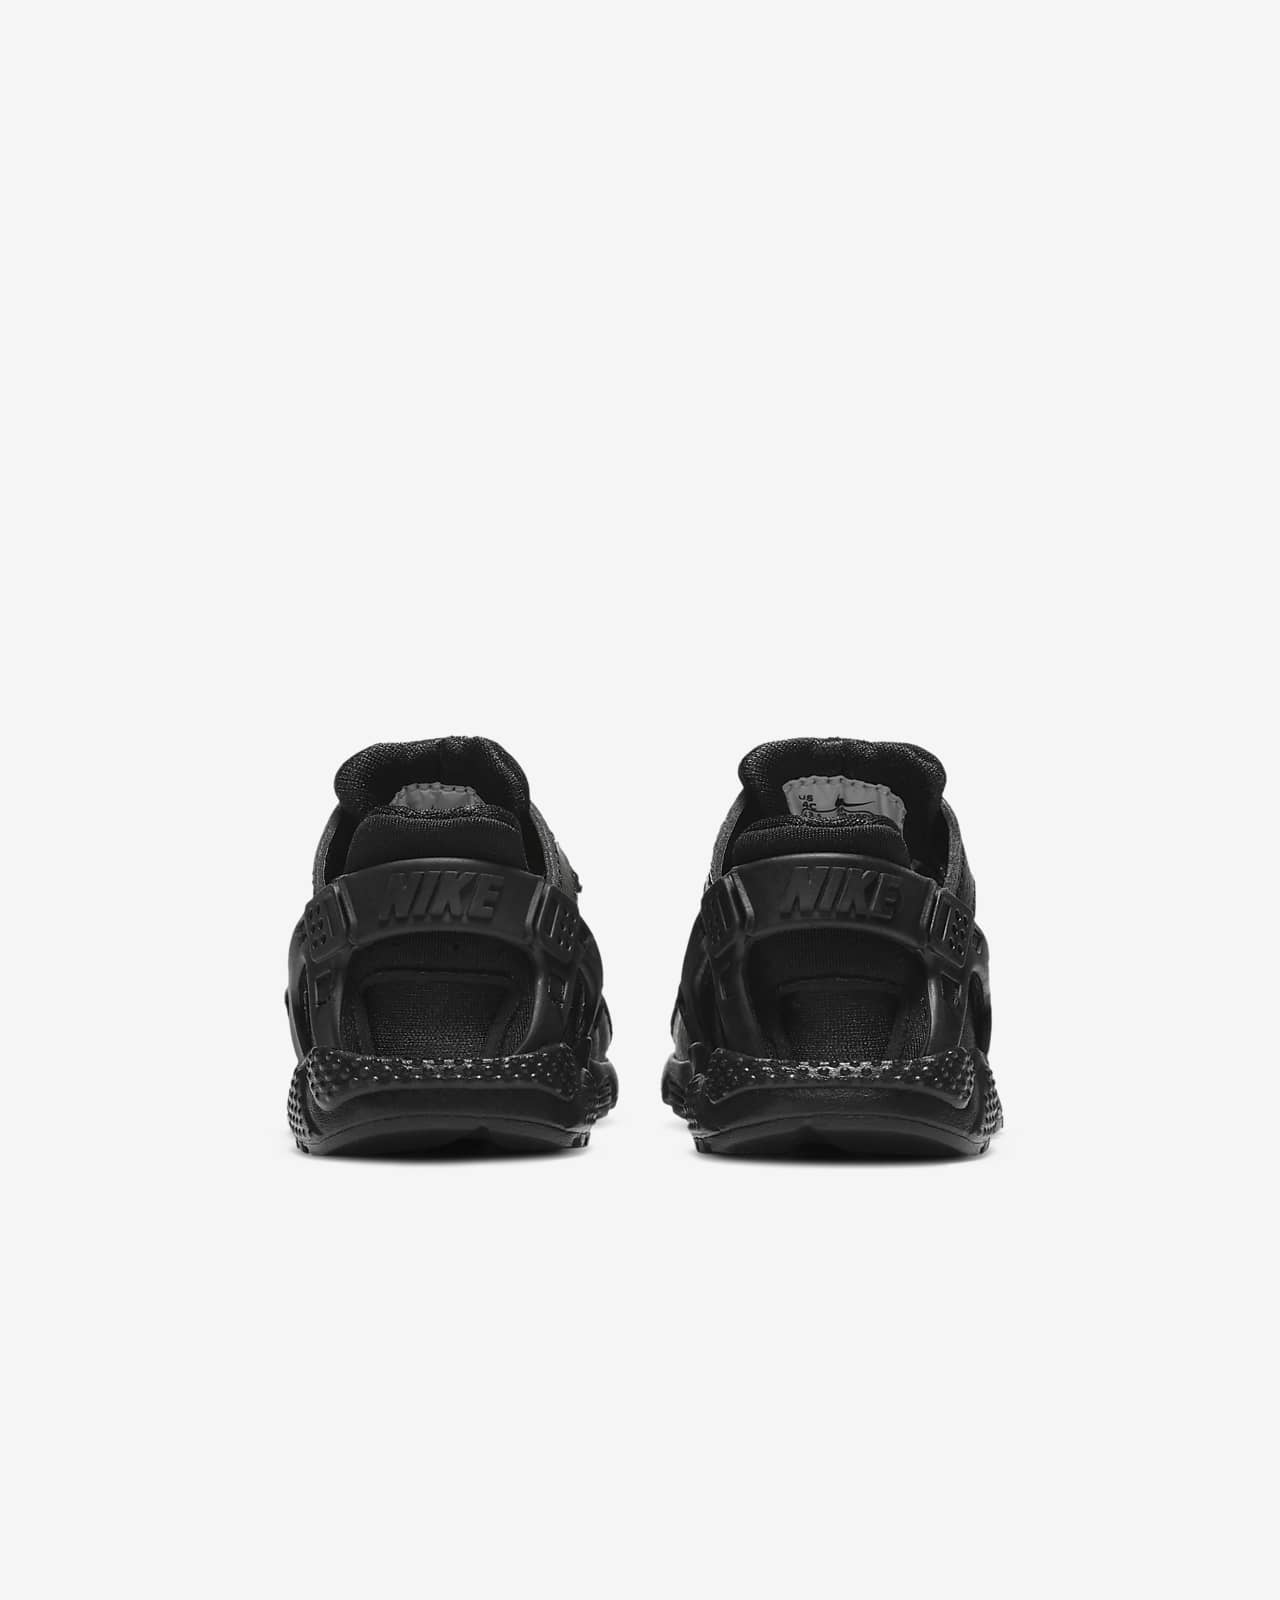 Nike Huarache Run Baby and Shoes. Nike